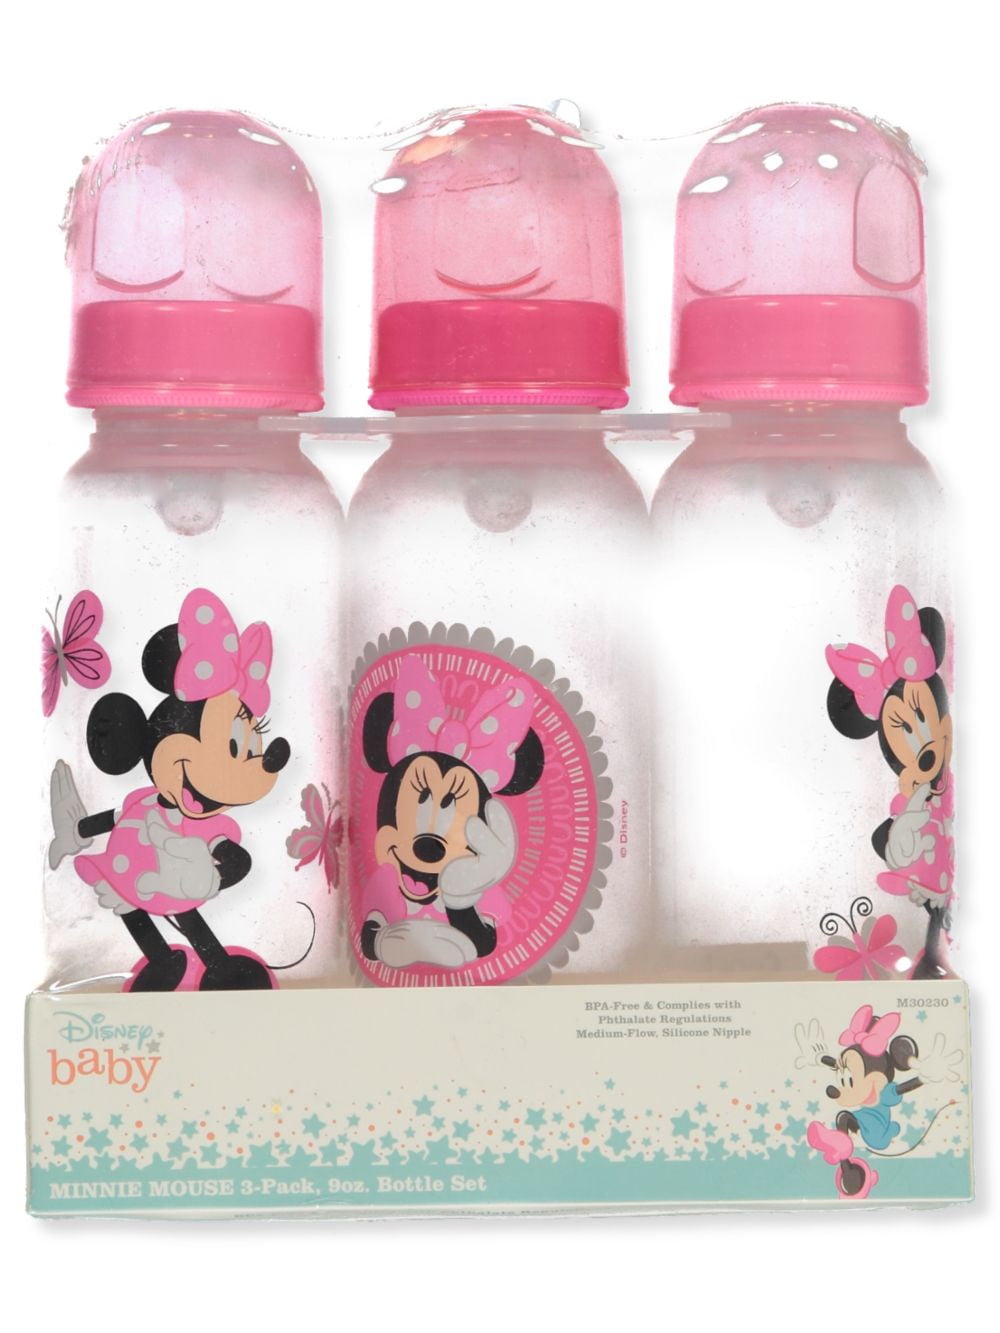 Disney Baby Mickey Mouse 9oz Bottle Bpa Free 